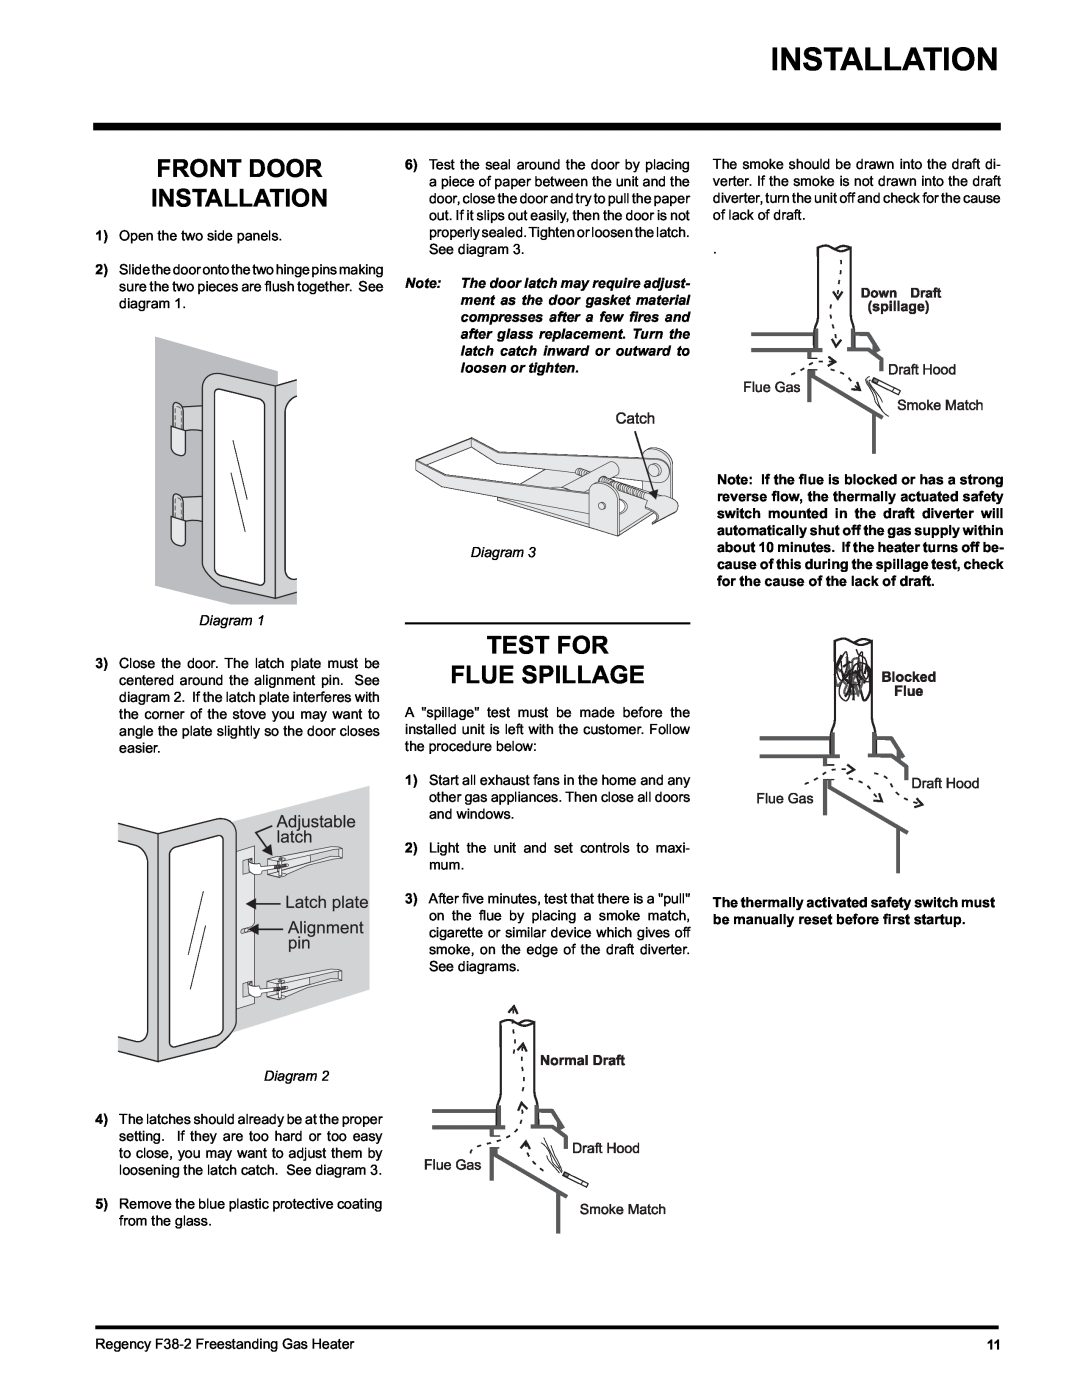 Regency Wraps F38-NG2, F38-LPG2 installation manual Front Door Installation, Test For Flue Spillage, Diagram 